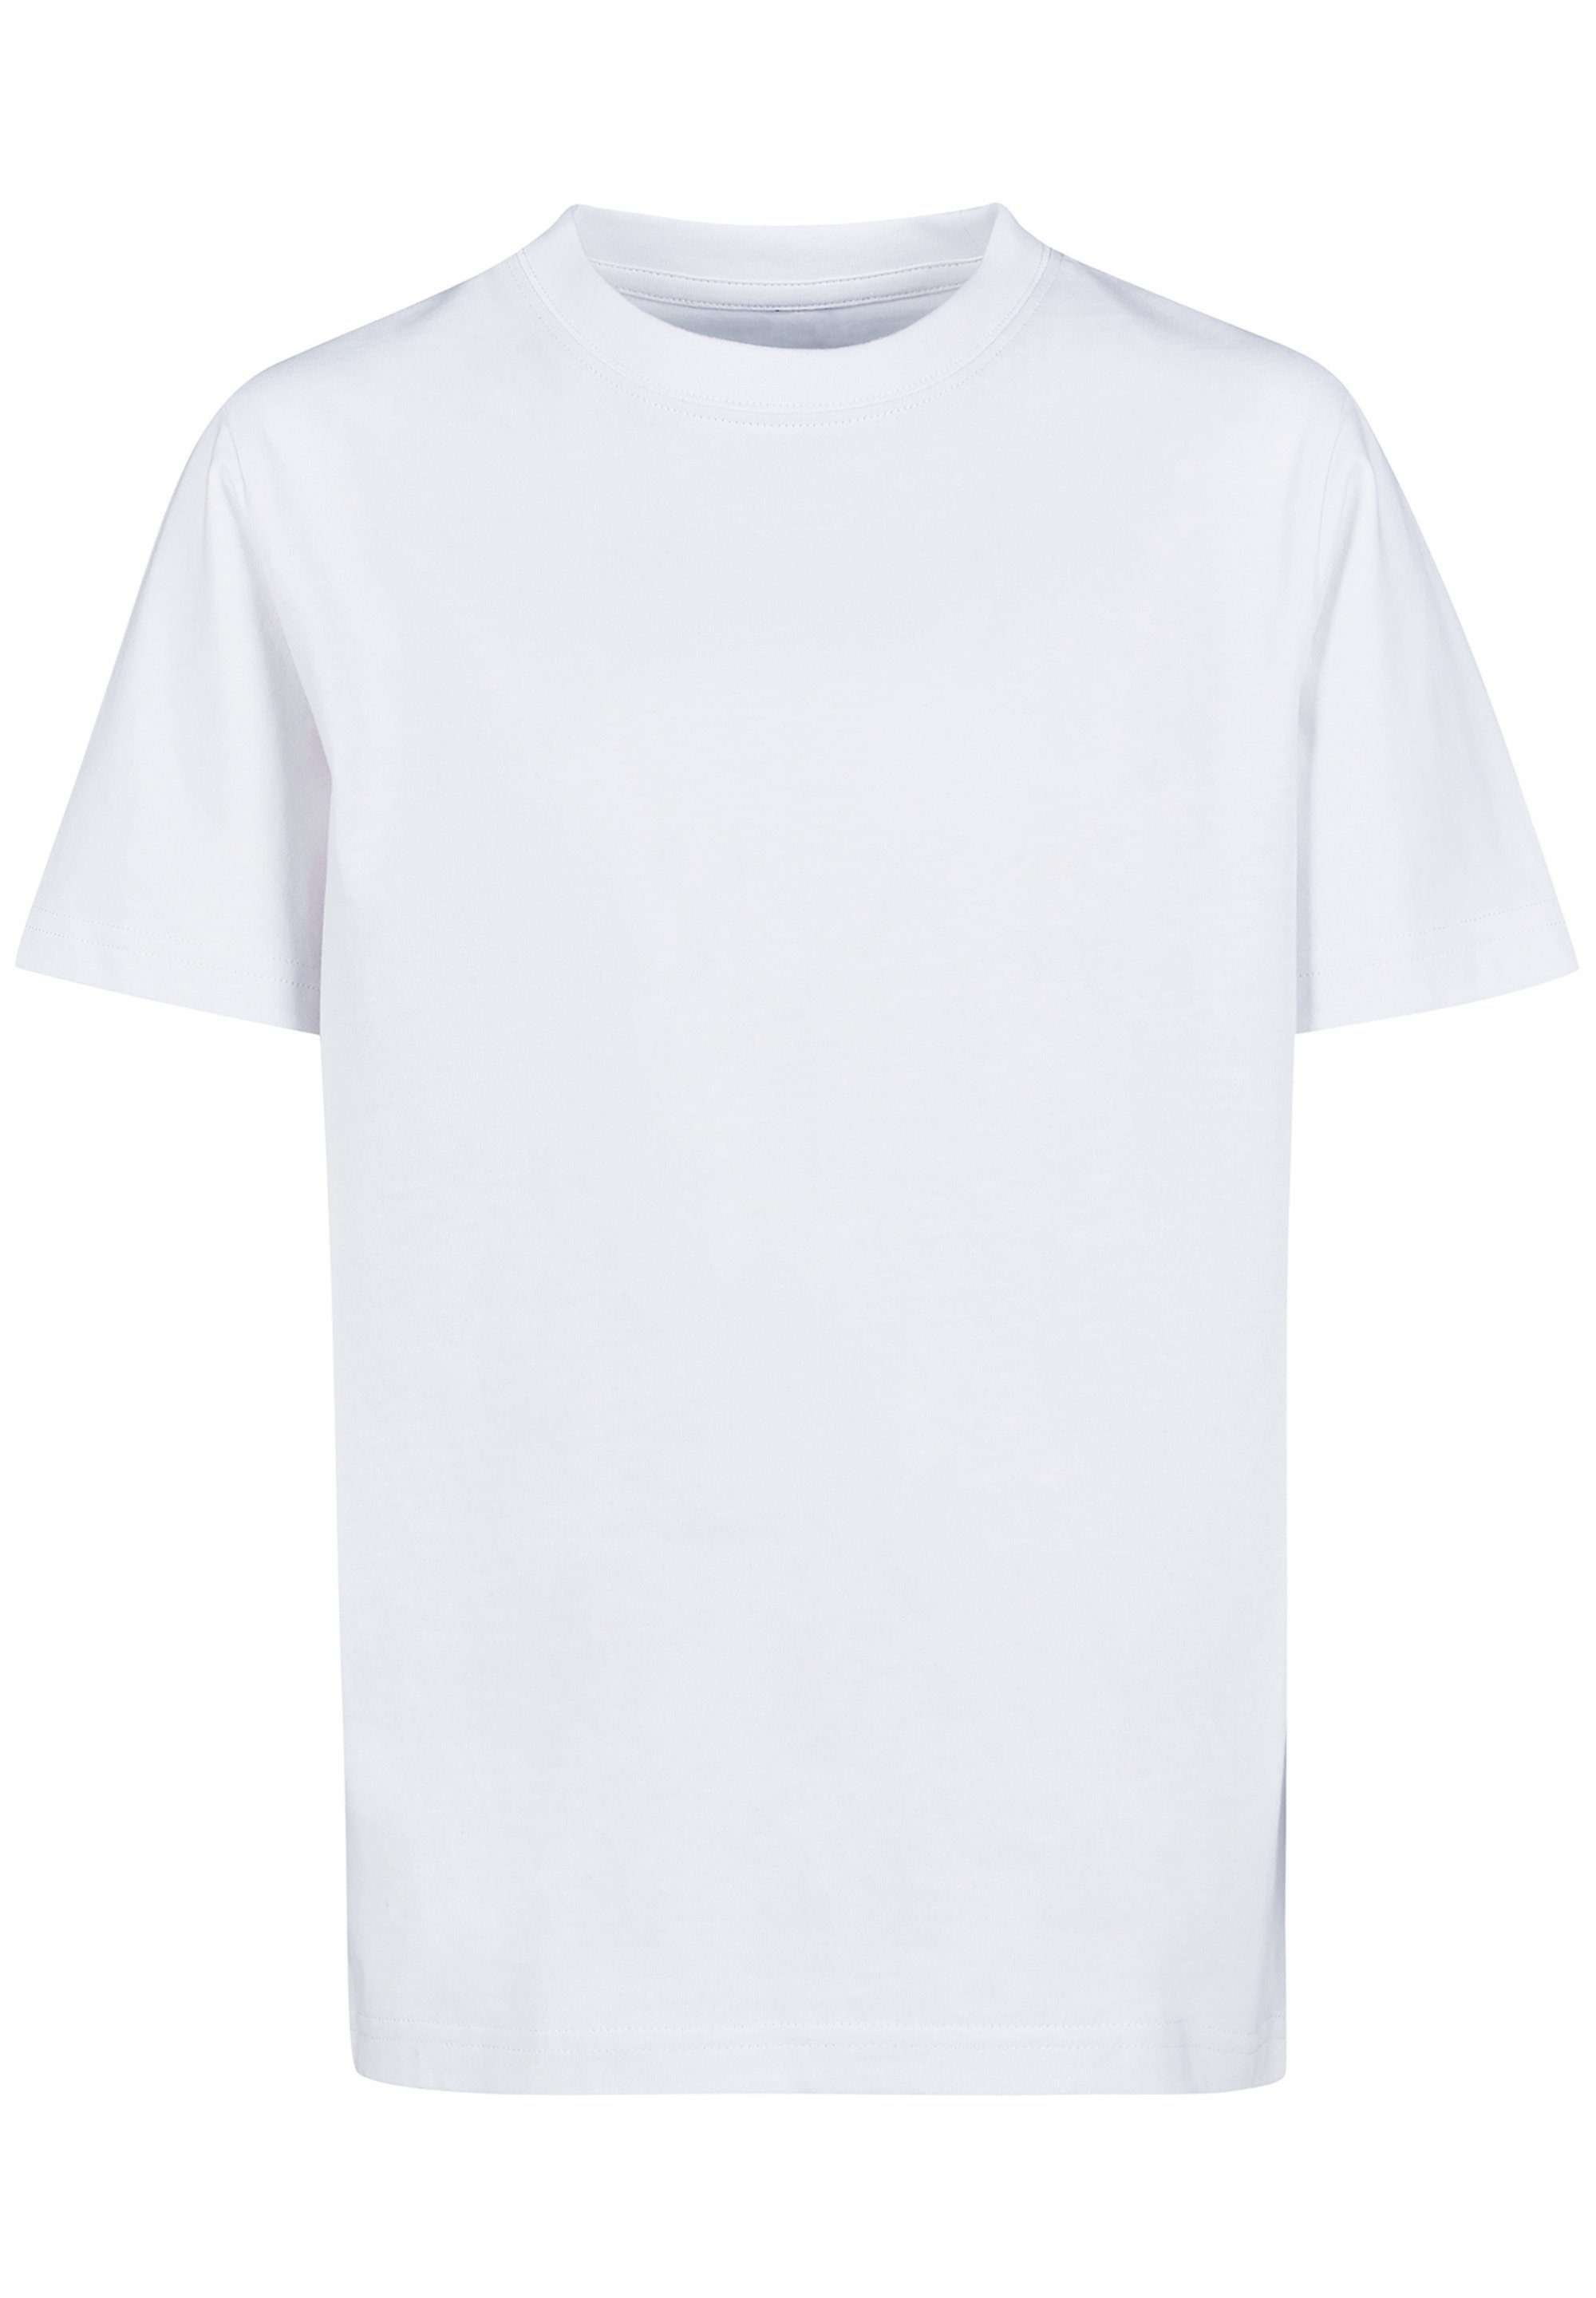 F4NT4STIC T-Shirt Basketball weiß Print Player UNISEX Sport